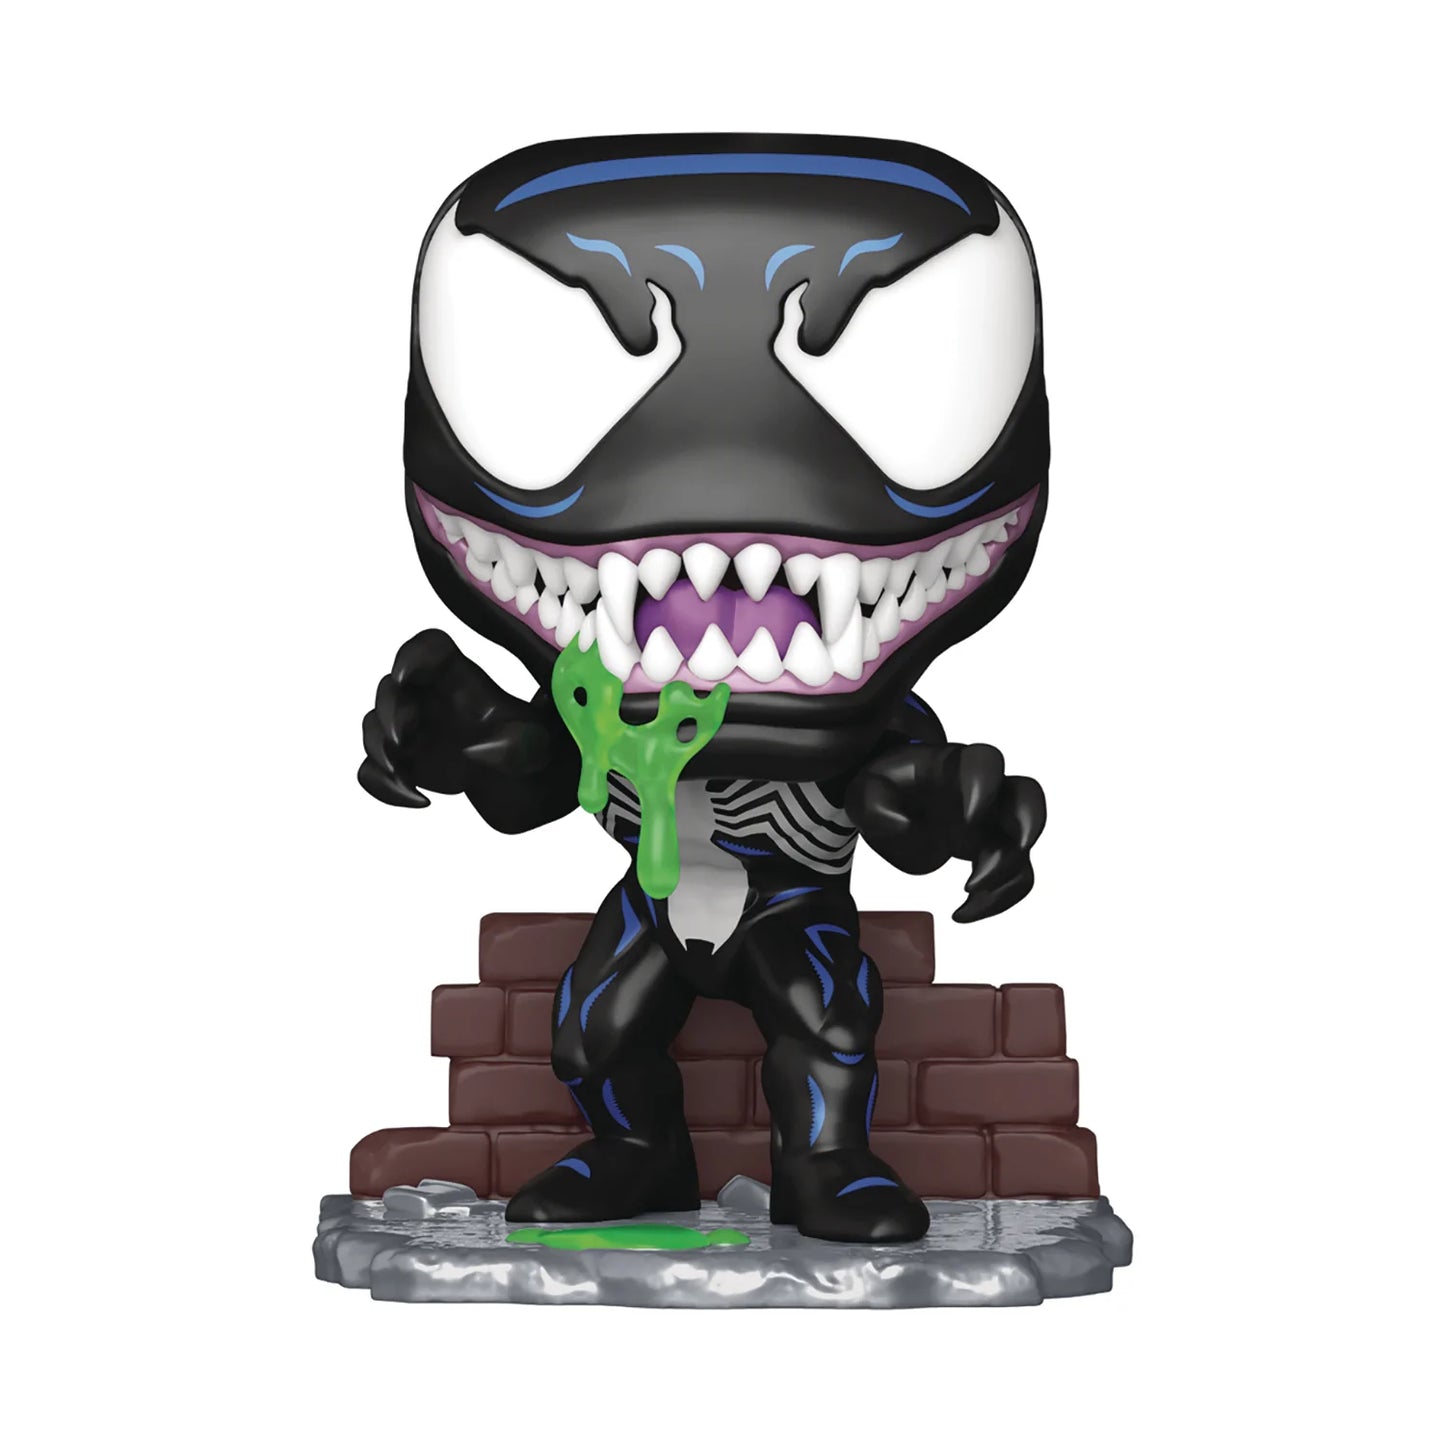 Funko Pop! Previews Exclusive Marvel Comic Cover Venom Lethal Protector Mini Figure